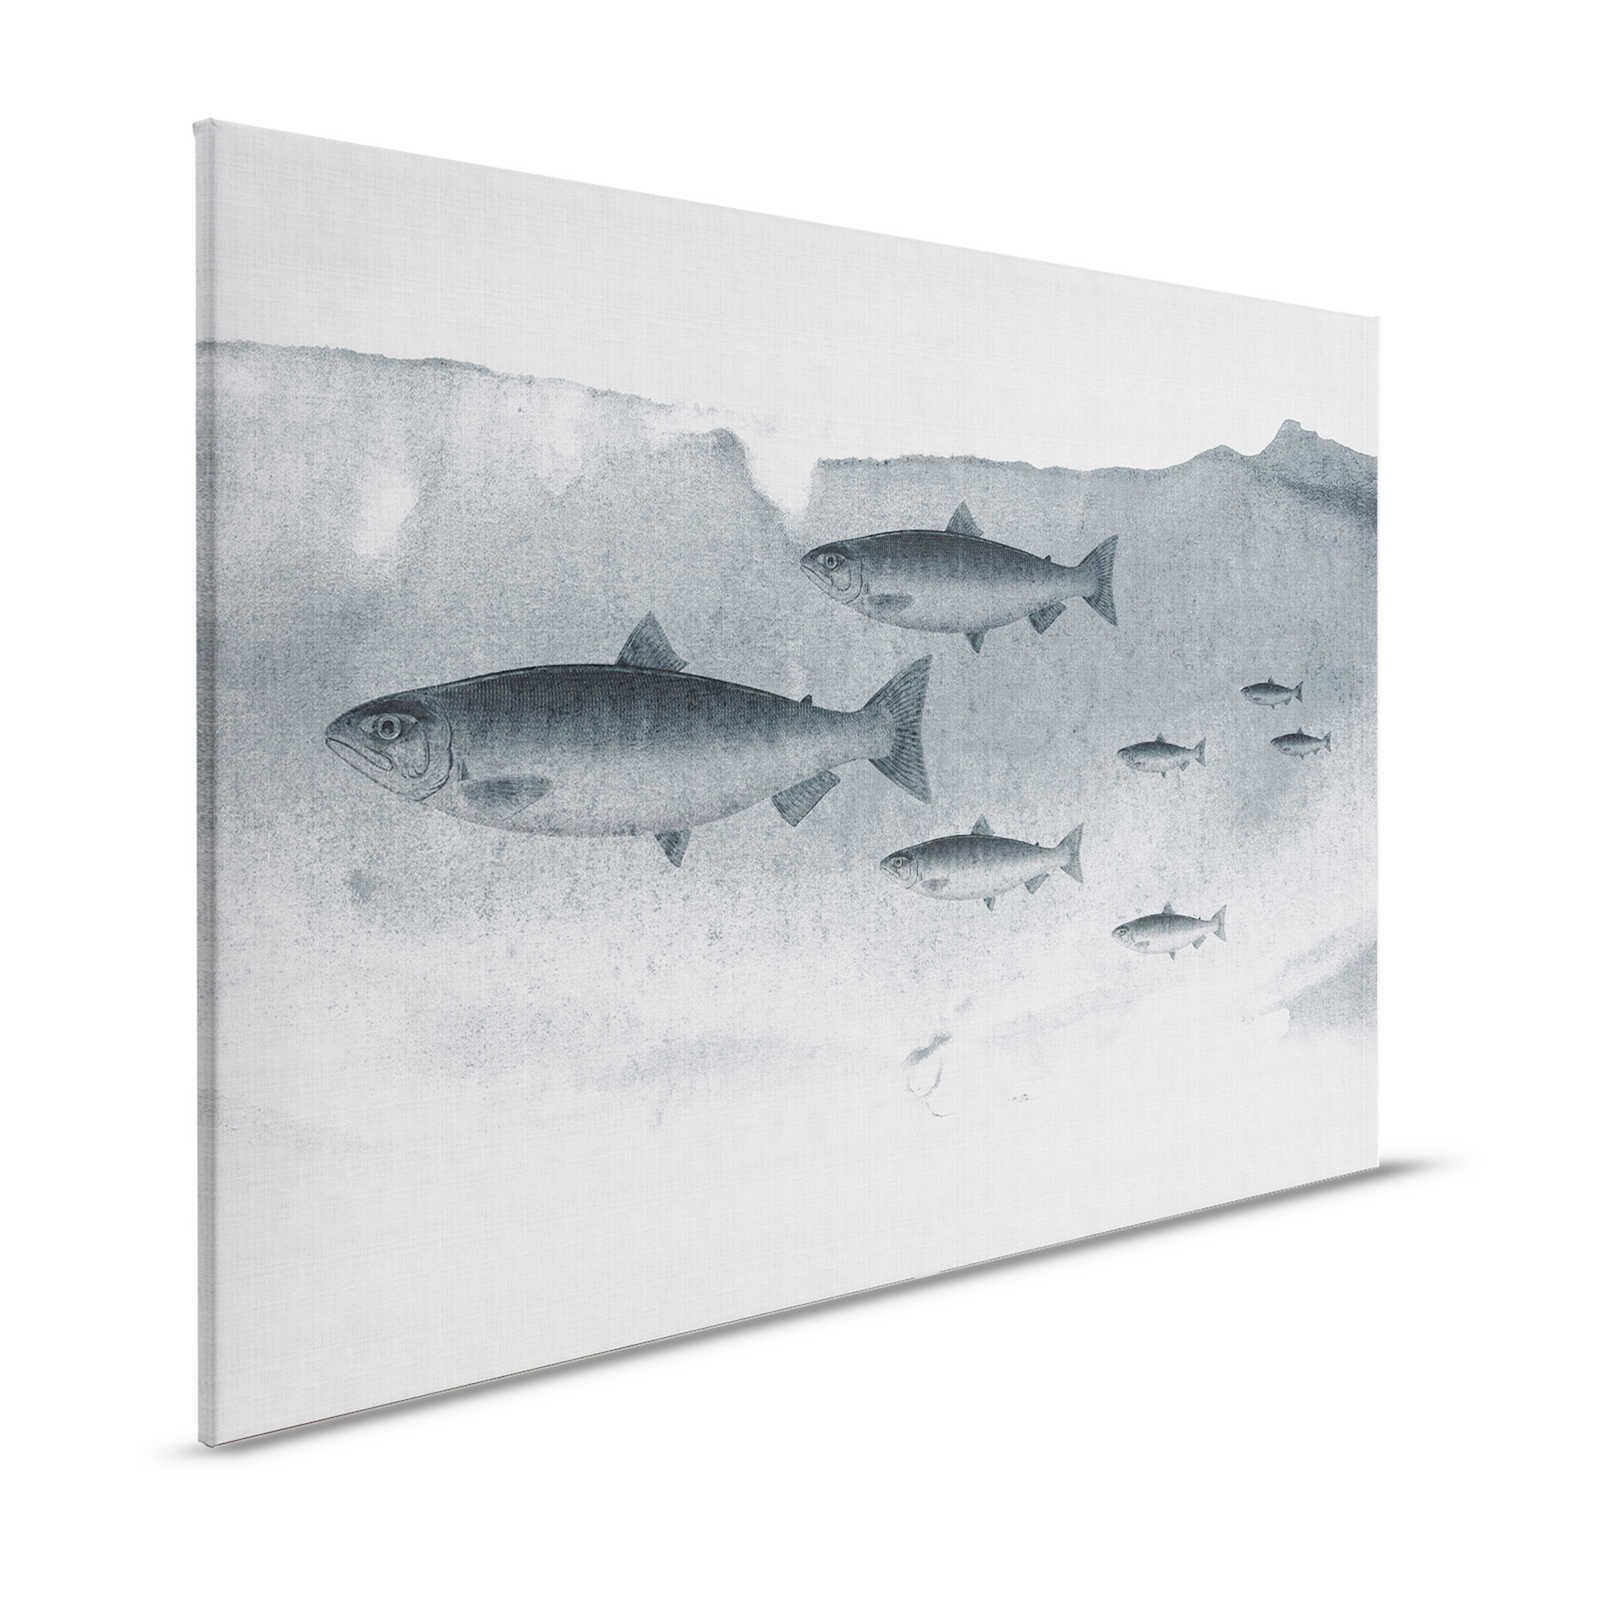 Into the blue 3 - Acuarela de peces en gris como cuadro en lienzo - 1,20 m x 0,80 m
